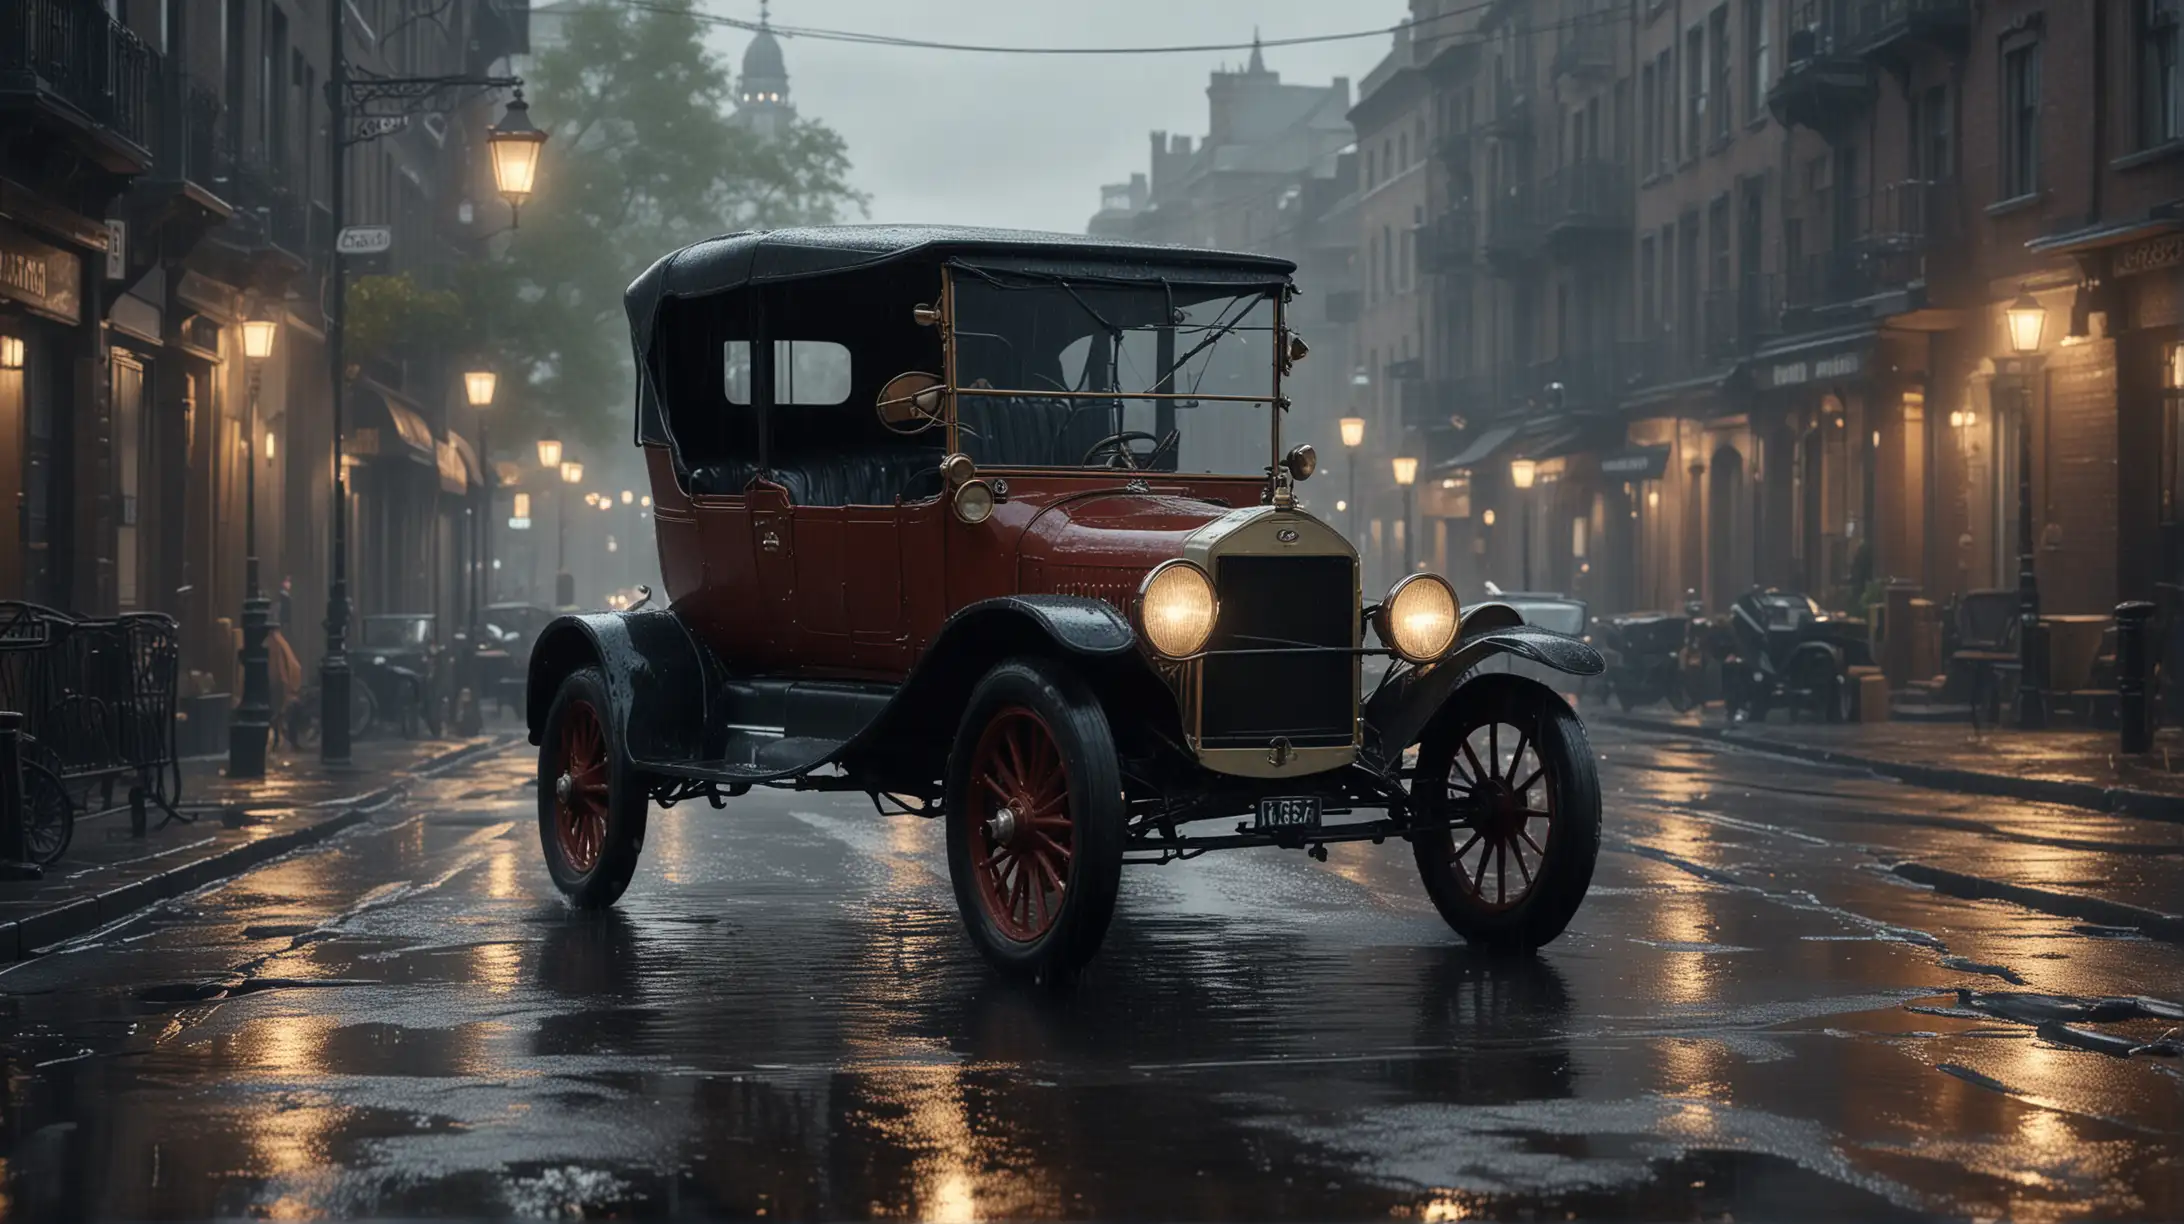 Fantastical Ford Model T Driving in Rainy Street Light